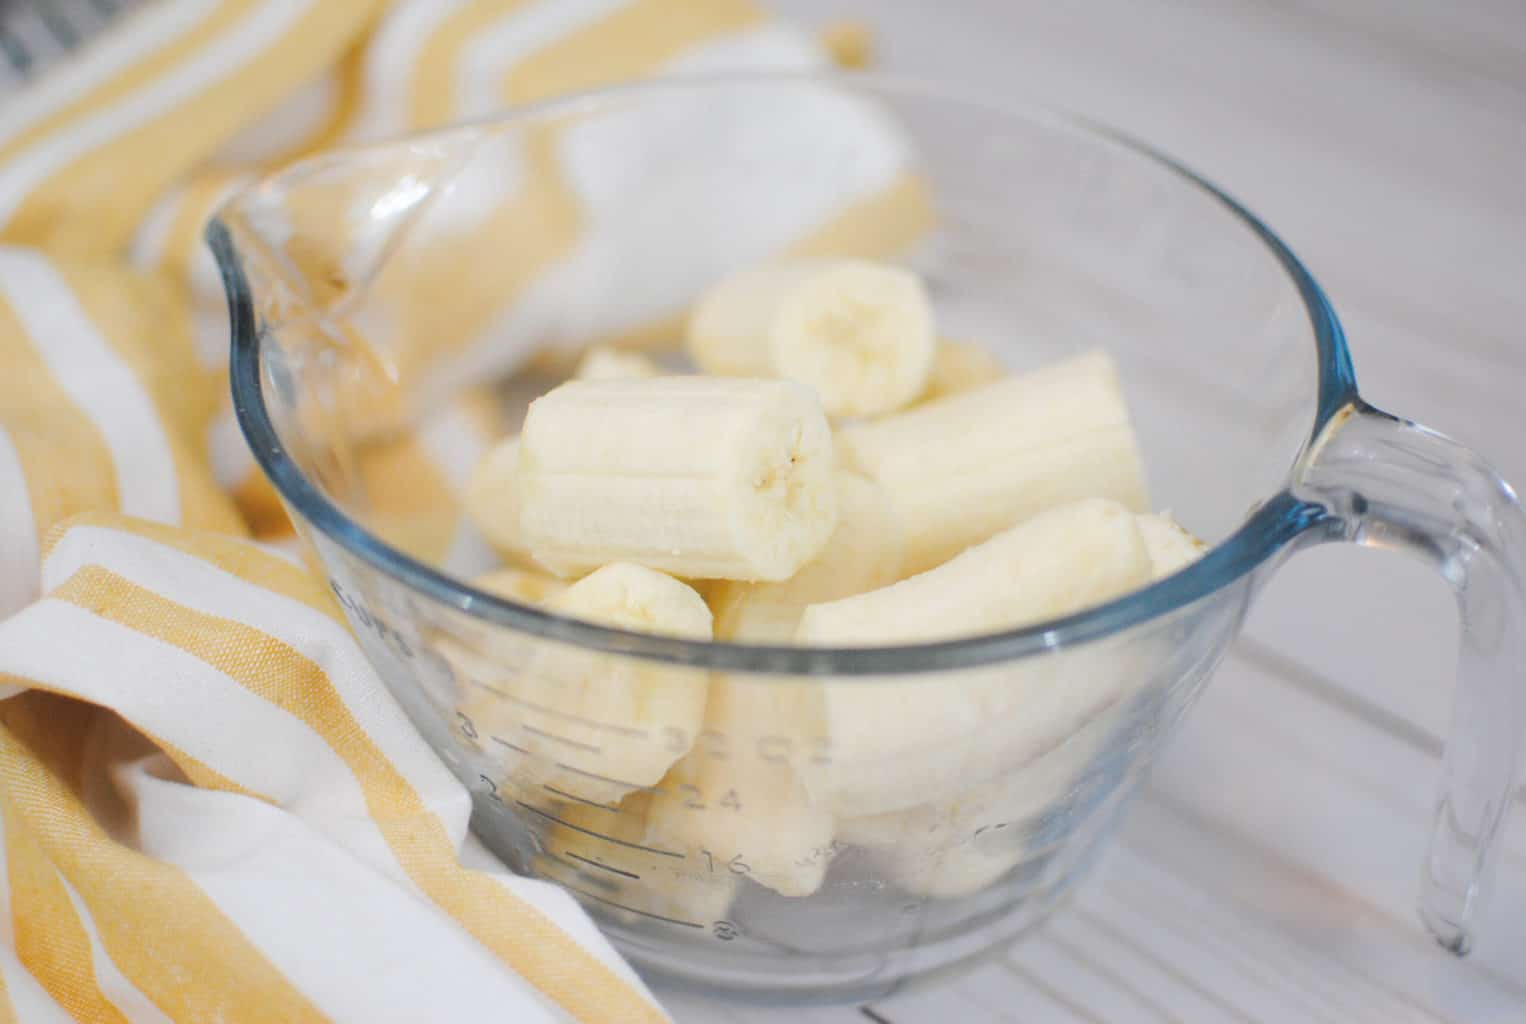 a bowl of chopped bananas